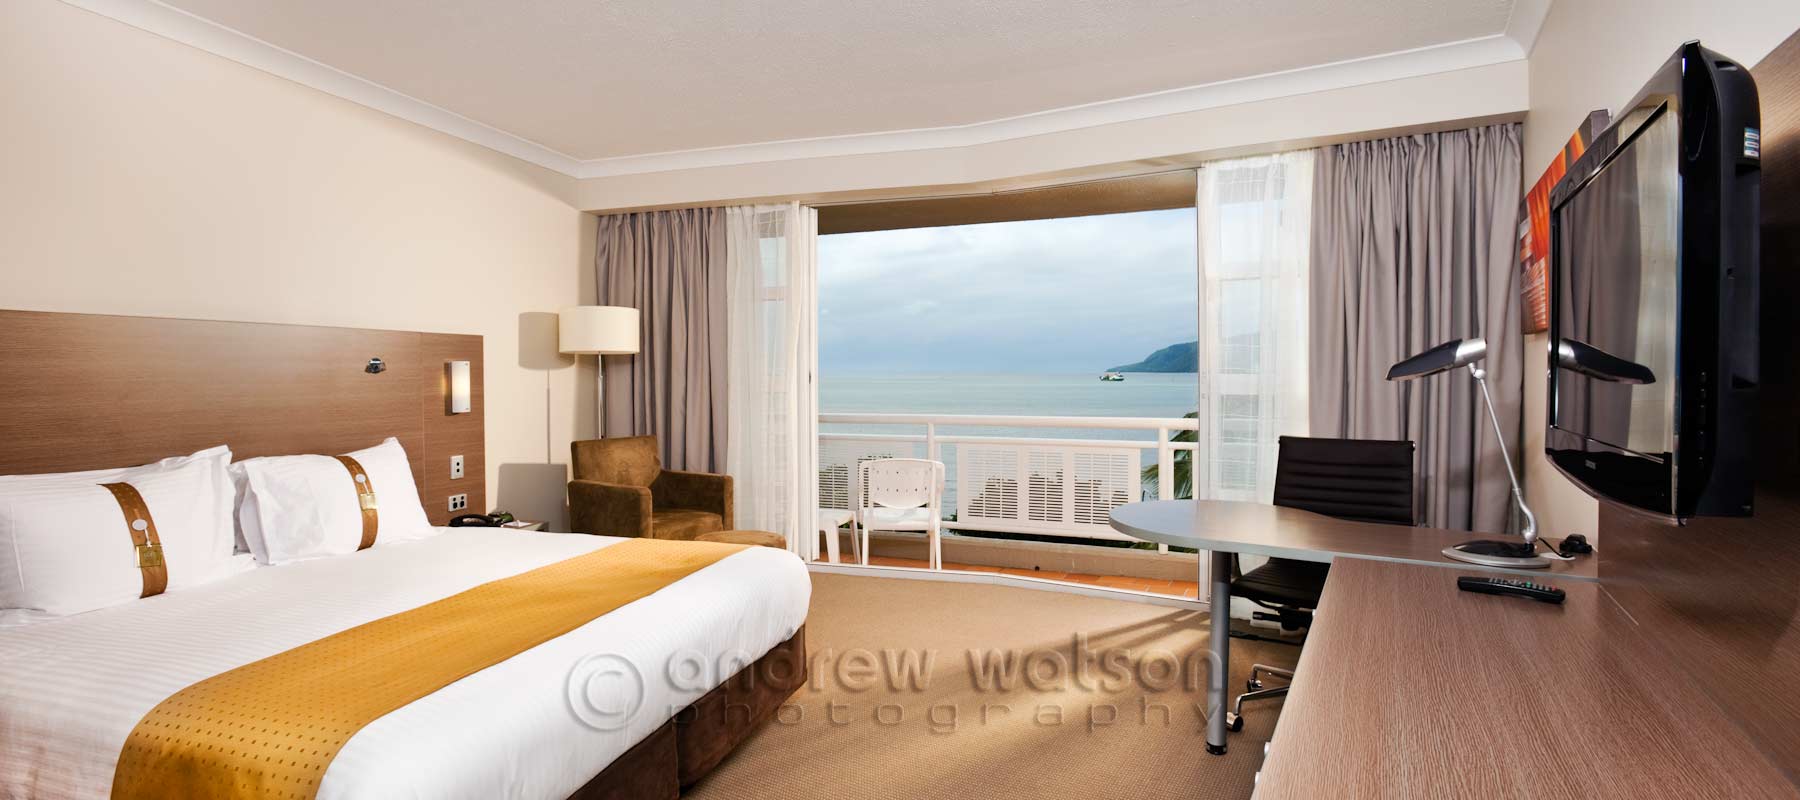 Hotel Photography - Holiday Inn, Cairns